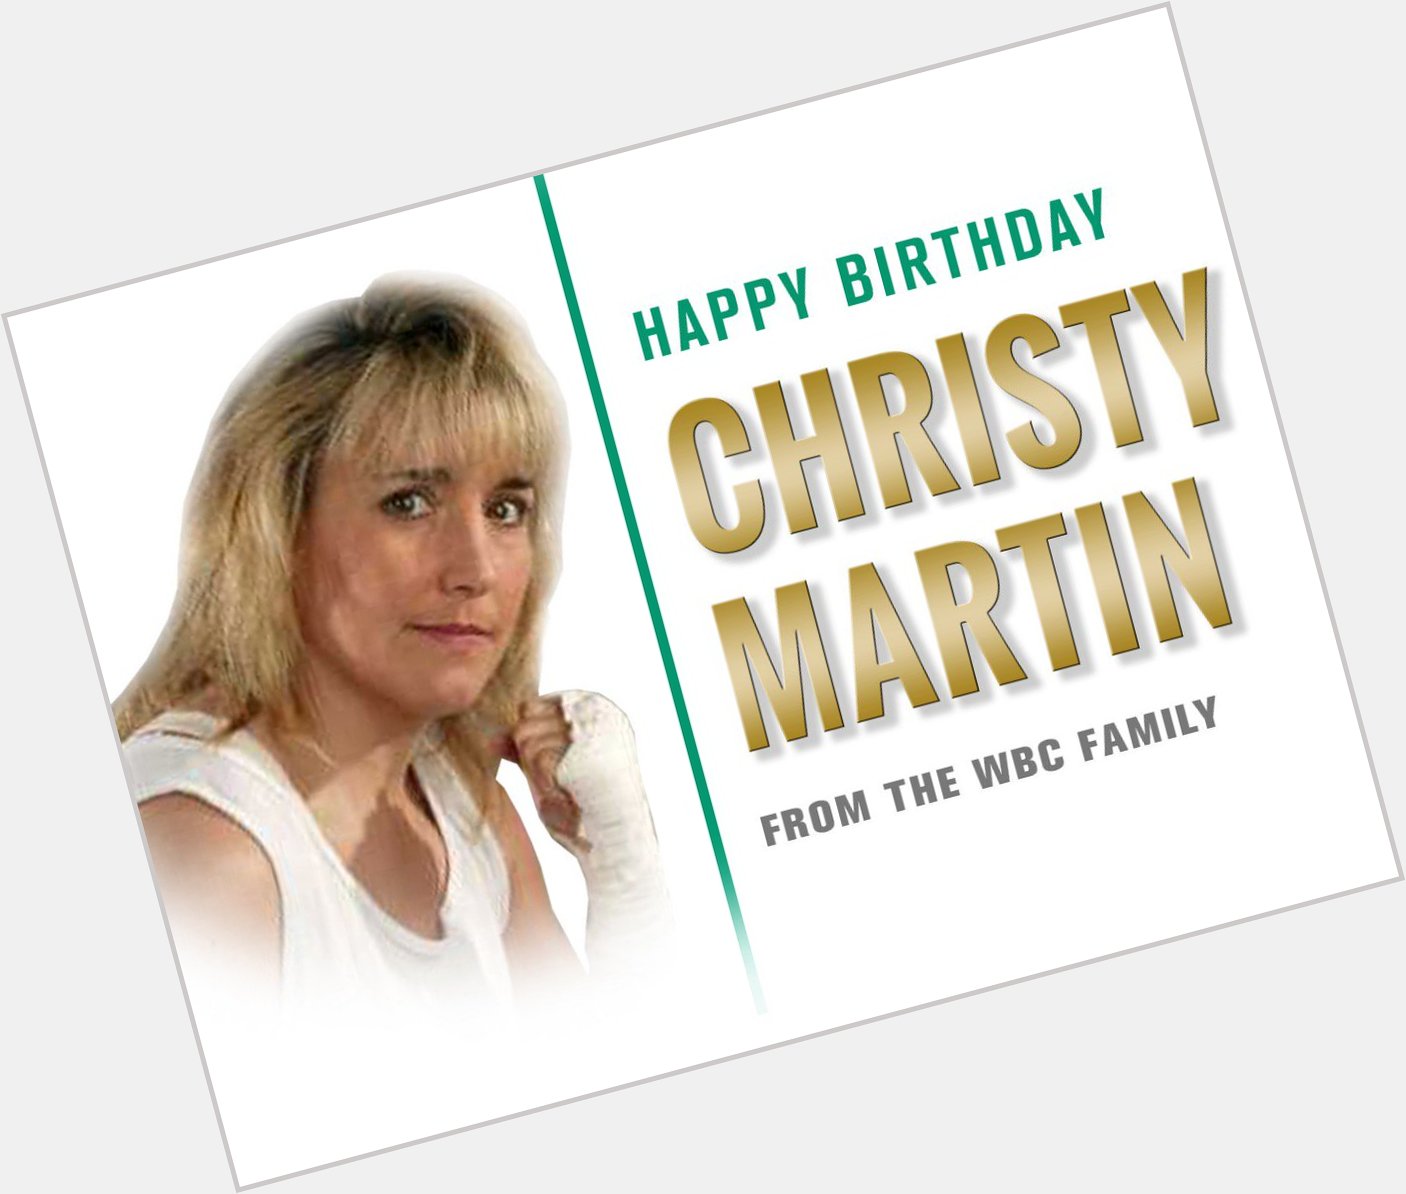 Happy birthday, legend !!!

Christy Martin; proud female boxing pioneer !!  